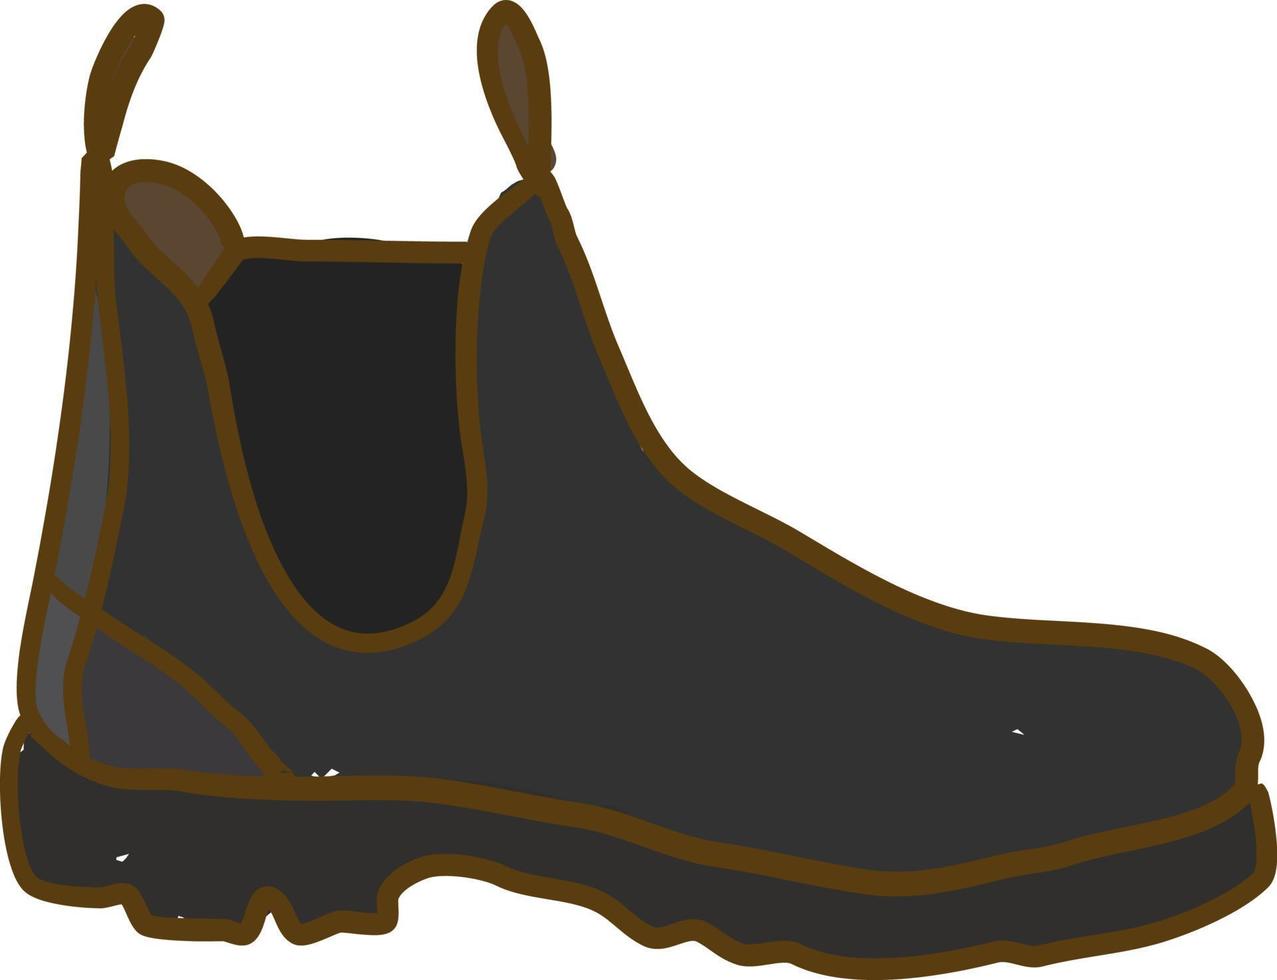 Winter boot, illustration, vector on white background.